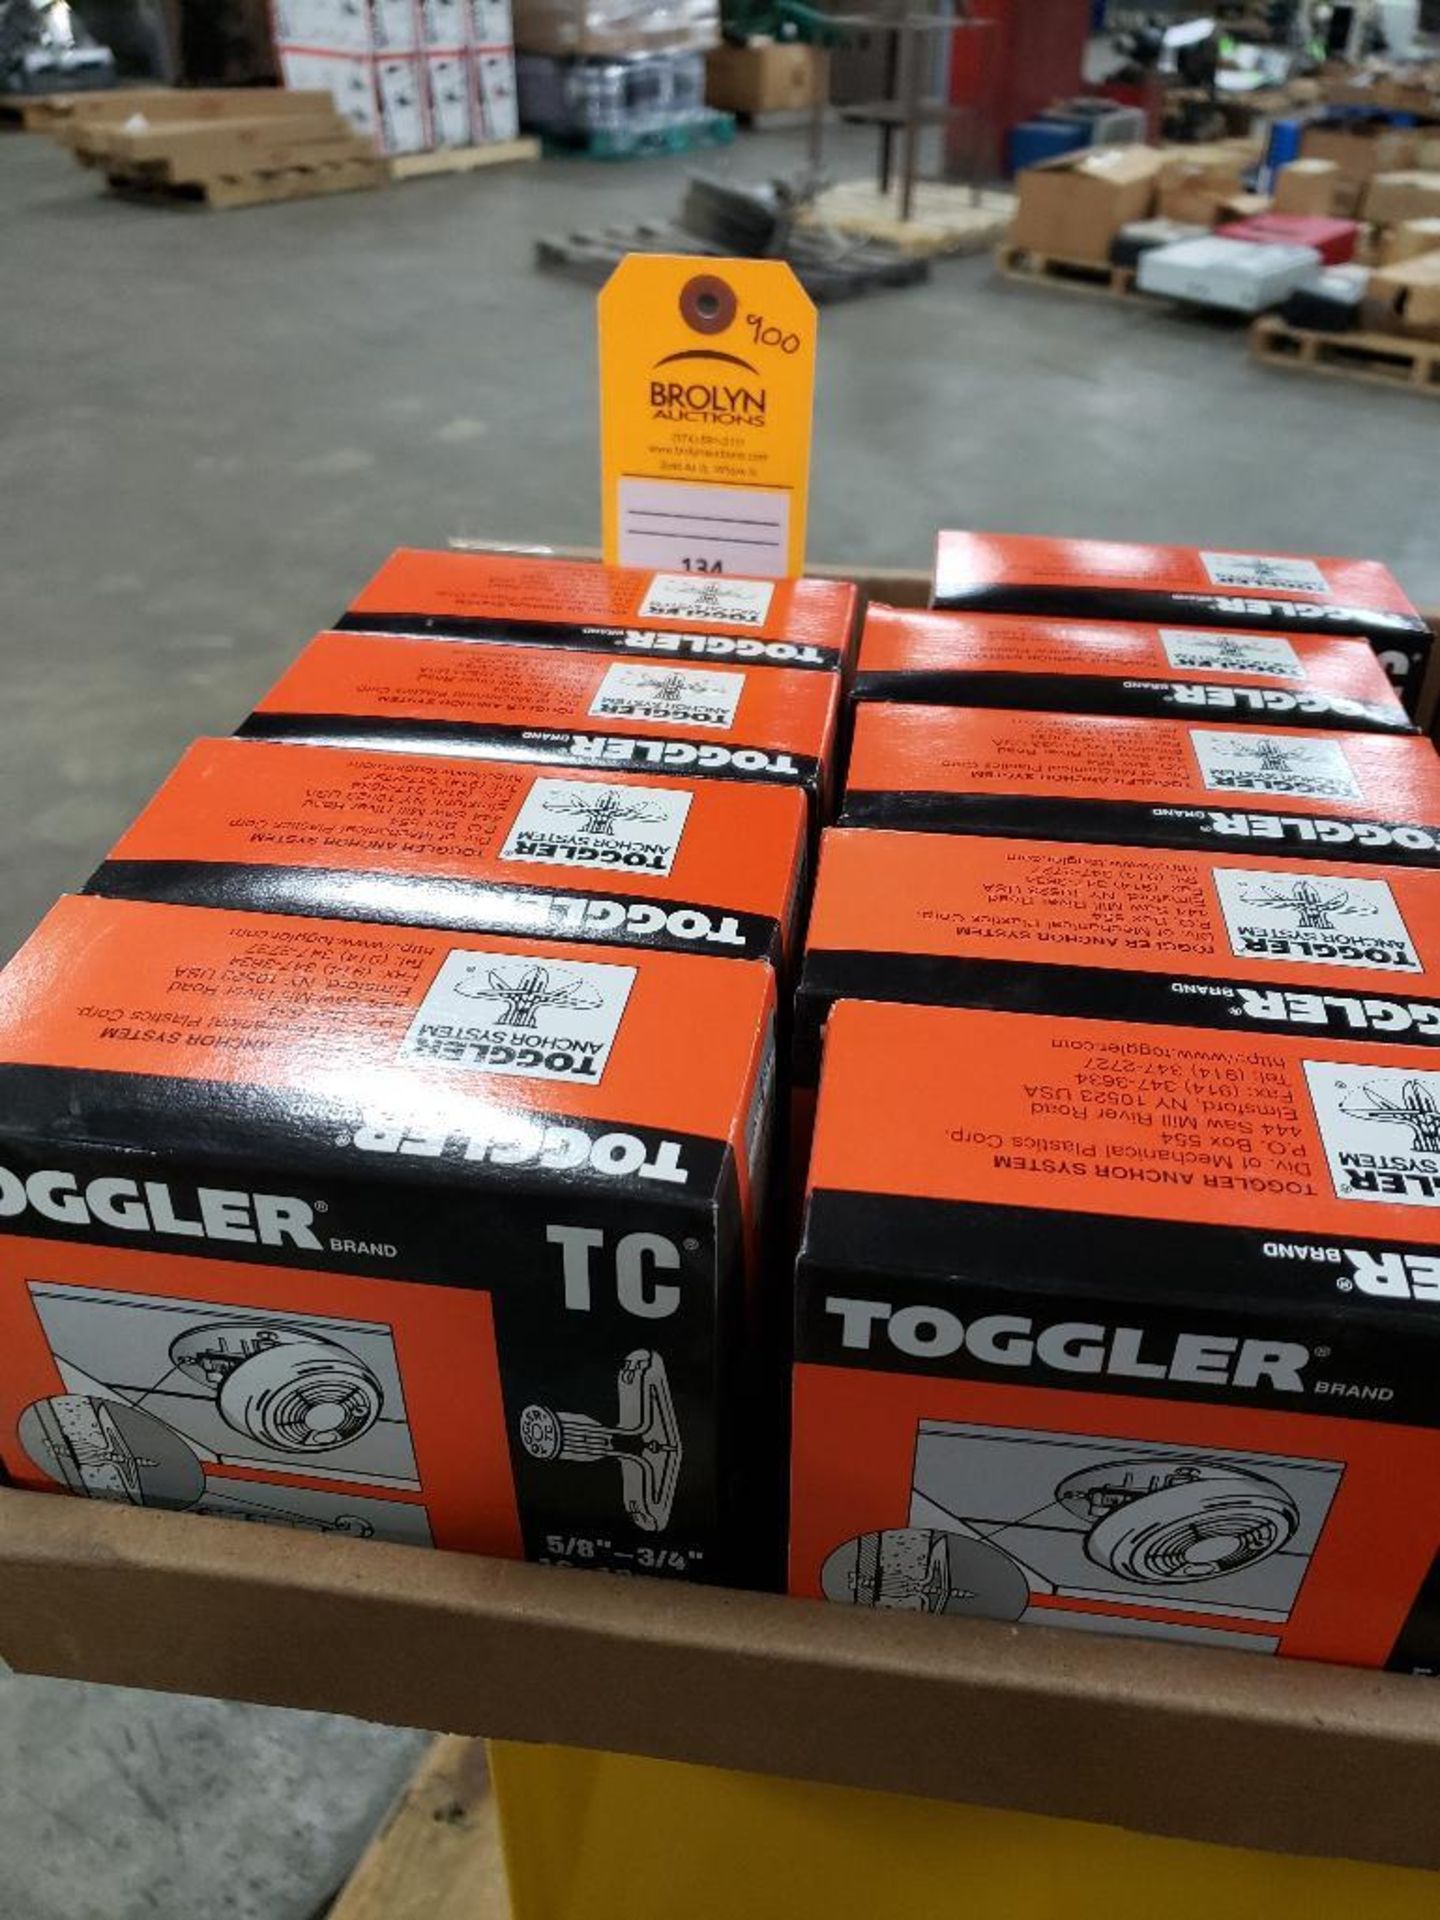 Qty 900 - Toggler anchors. New in bulk box.